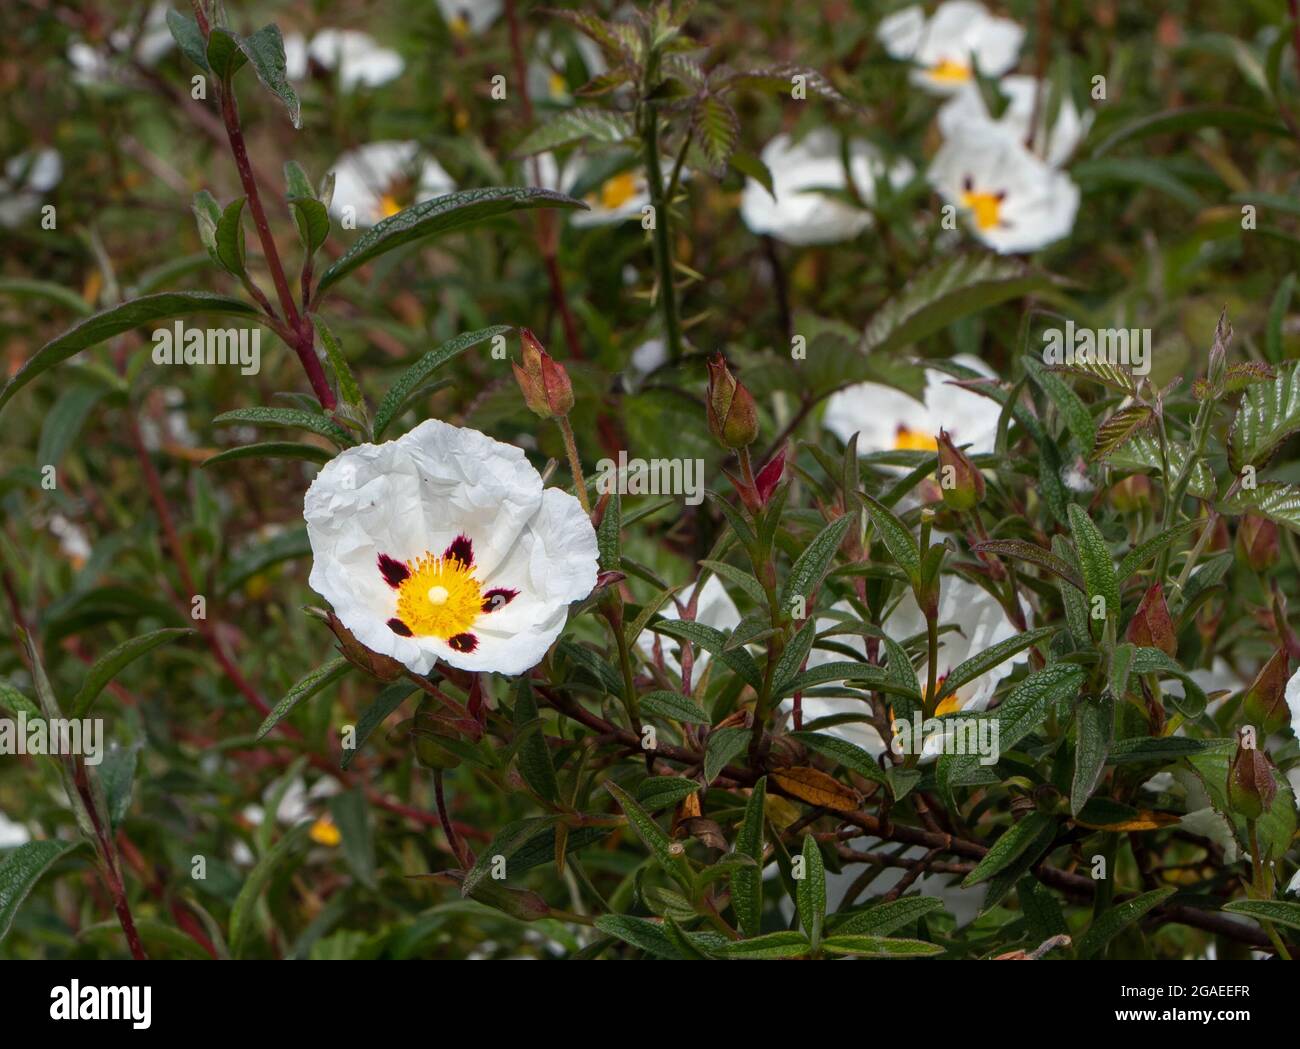 Cistus ladanifer or labdanum or gum rockrose flowering plant. White spotted flower, buds and leaves Stock Photo